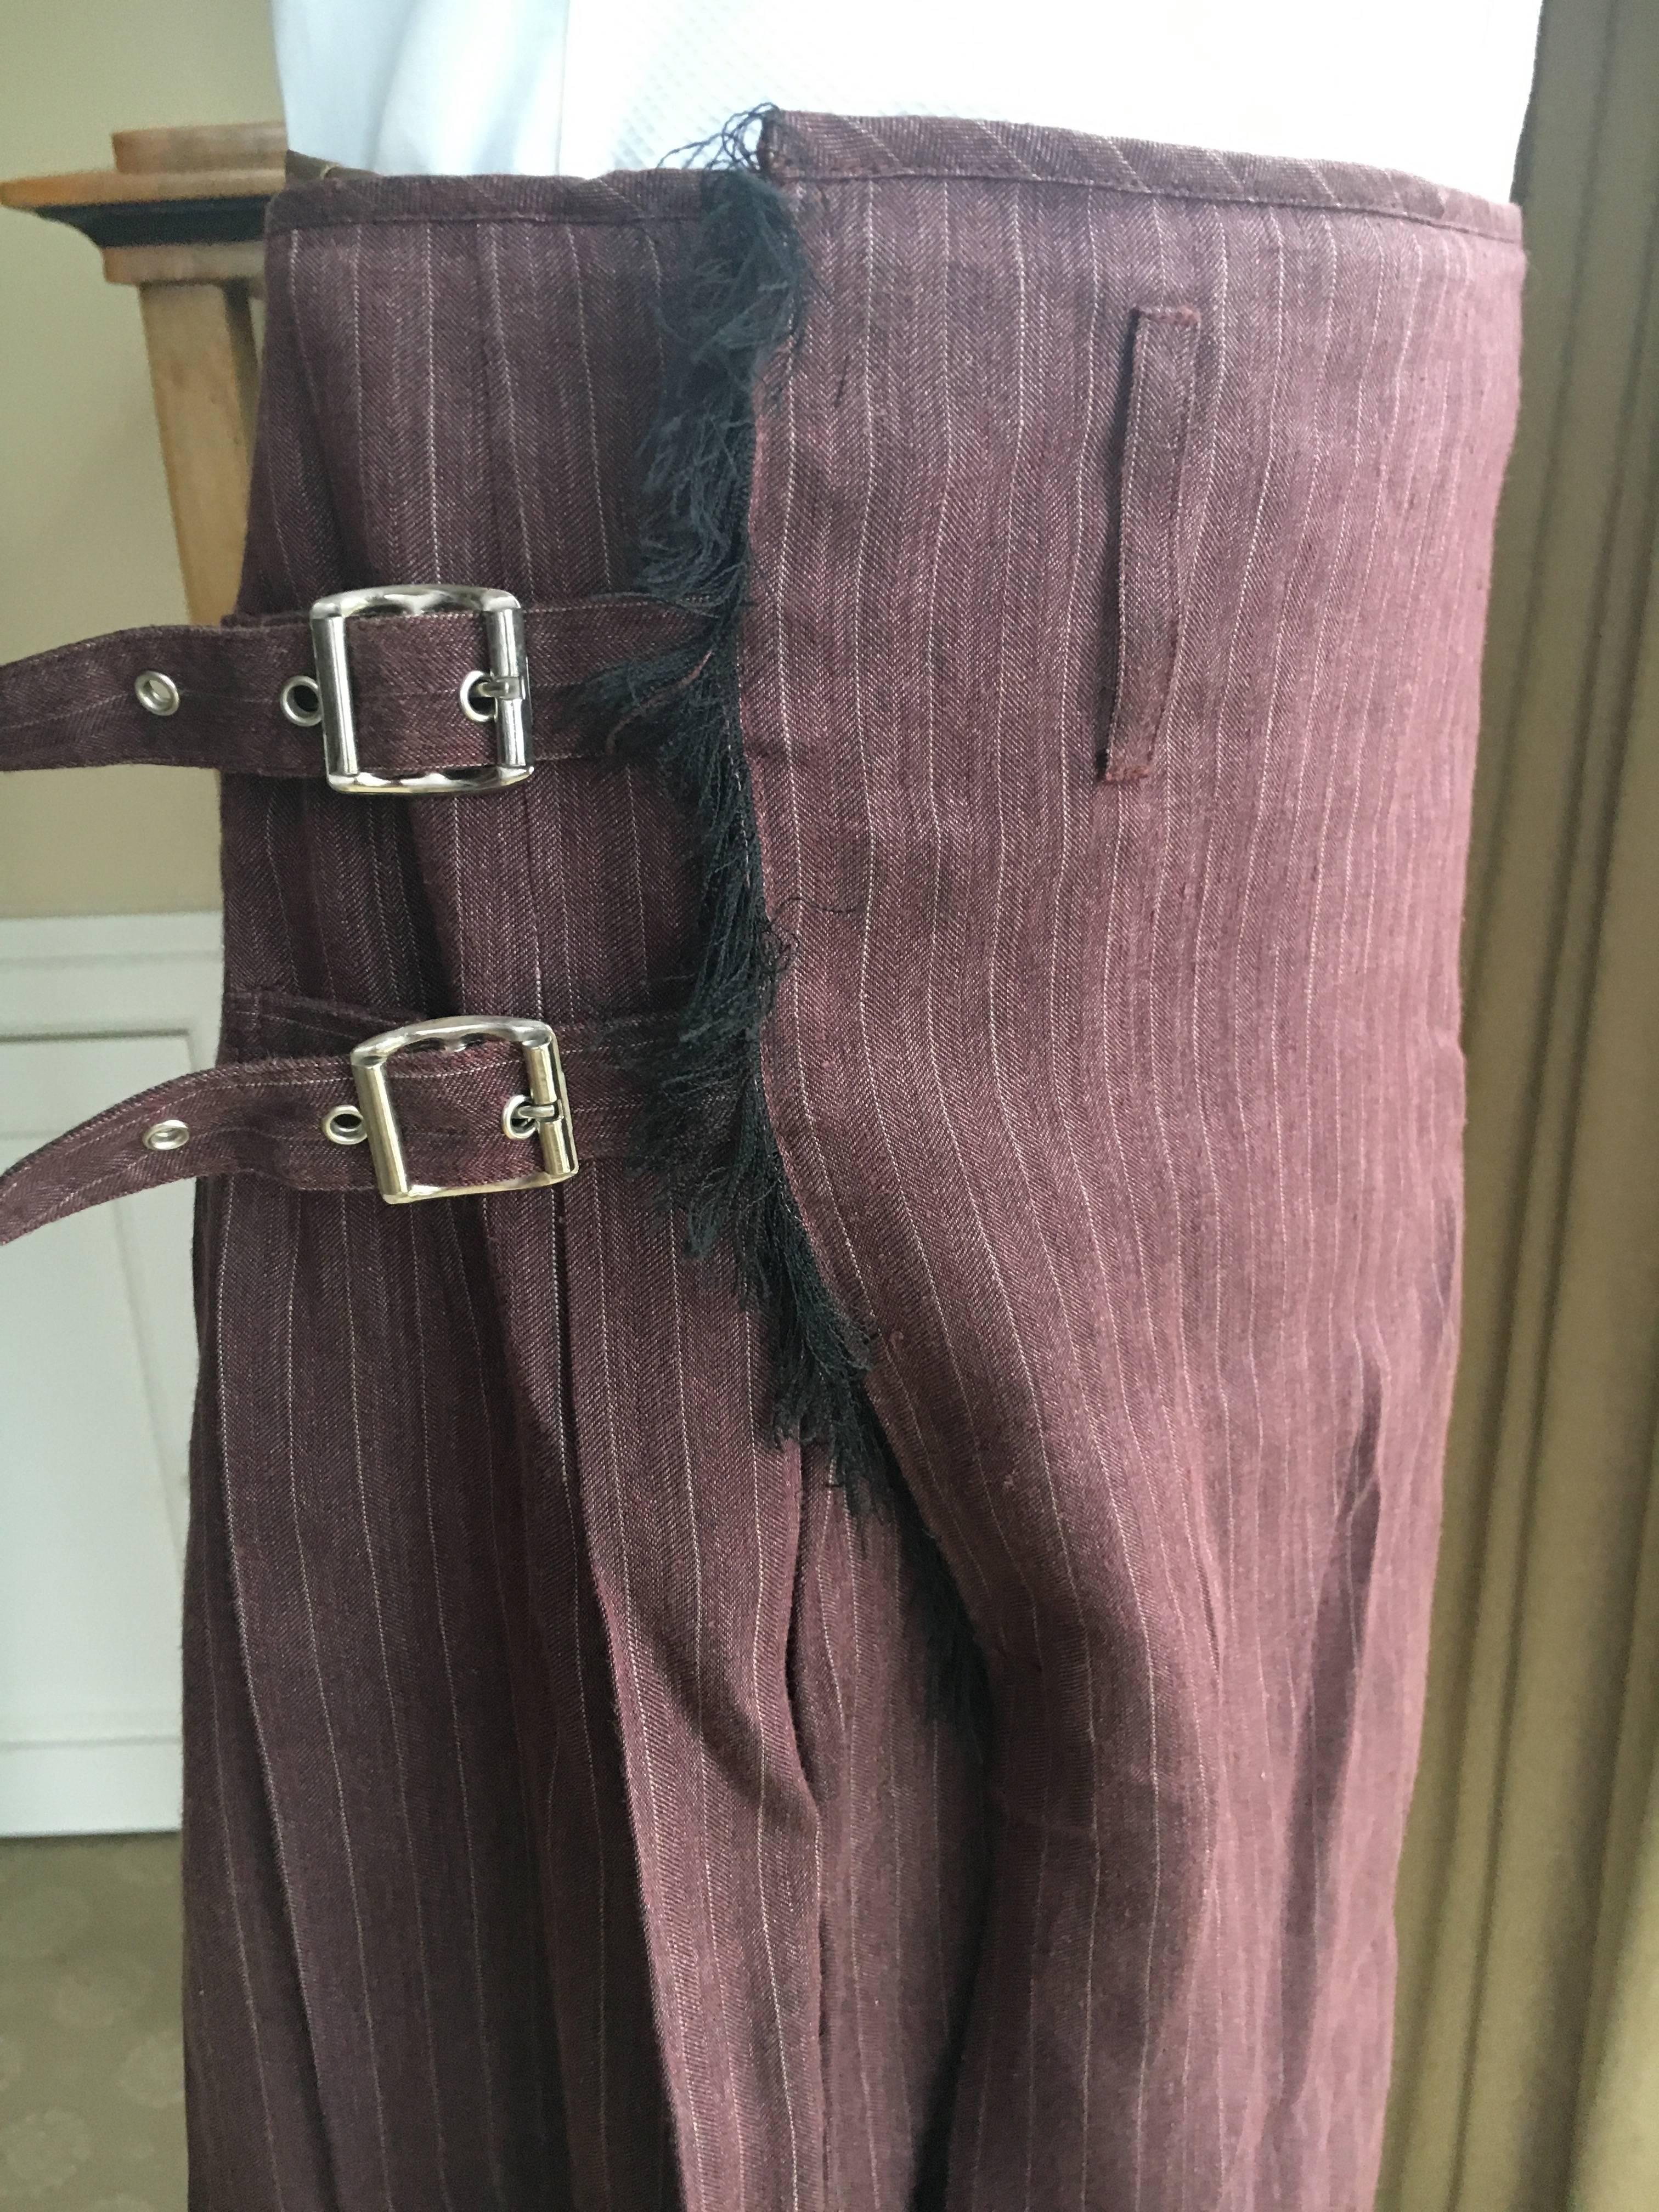 Wonderful pleated kilt from Jean Paul Gaultier Homme.
34' waist